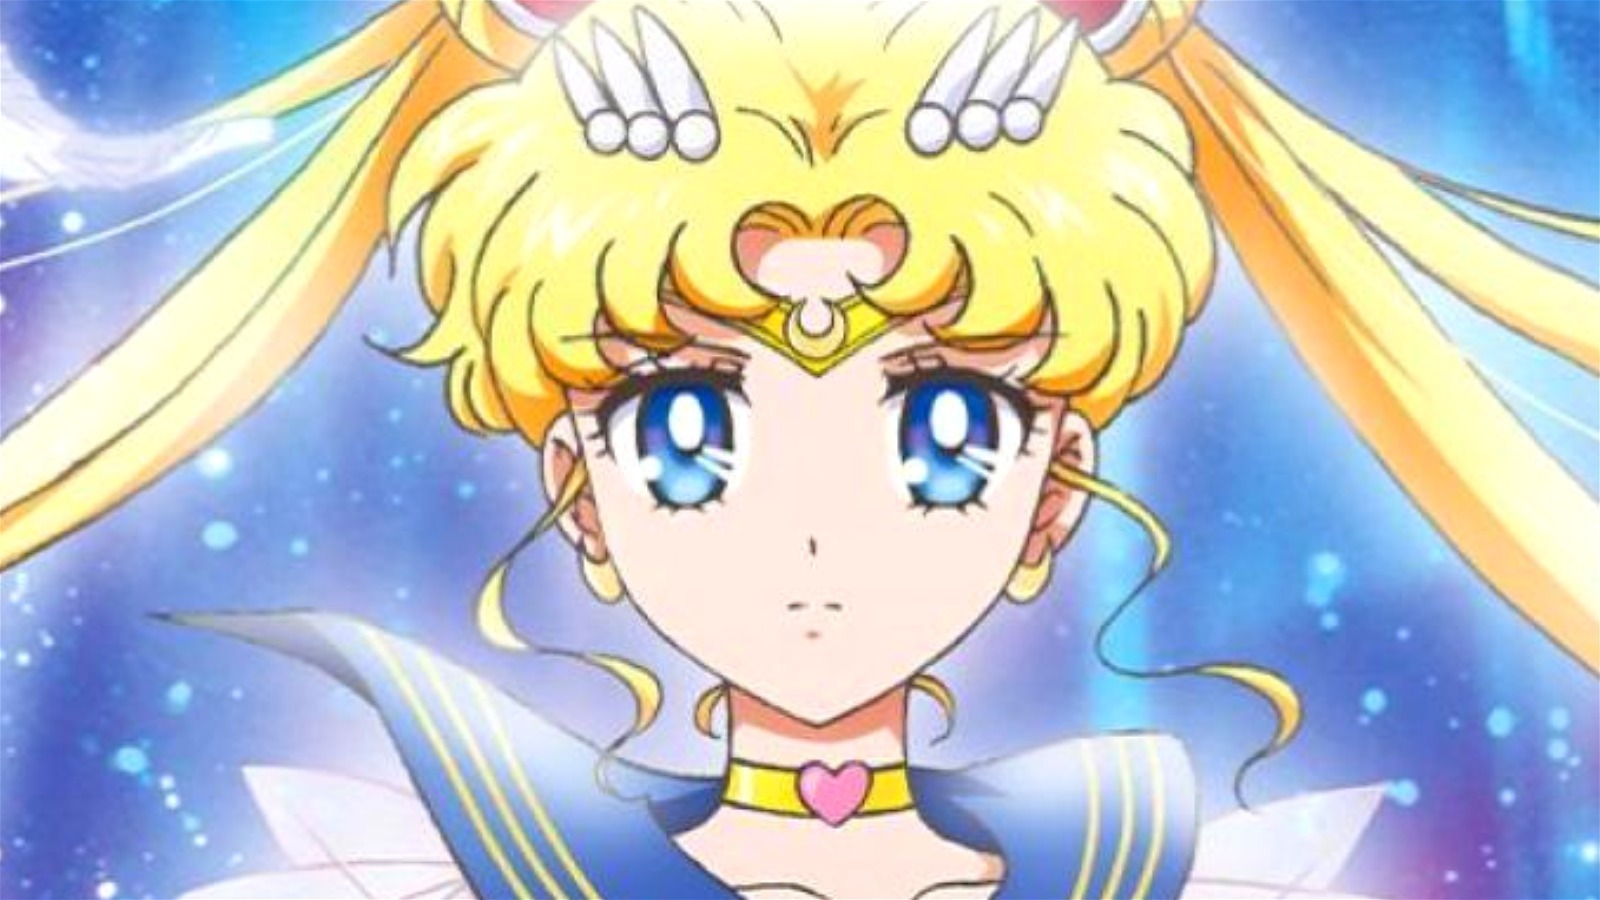 Netflix Streams Sailor Moon Crystal on July 1 - News - Anime News